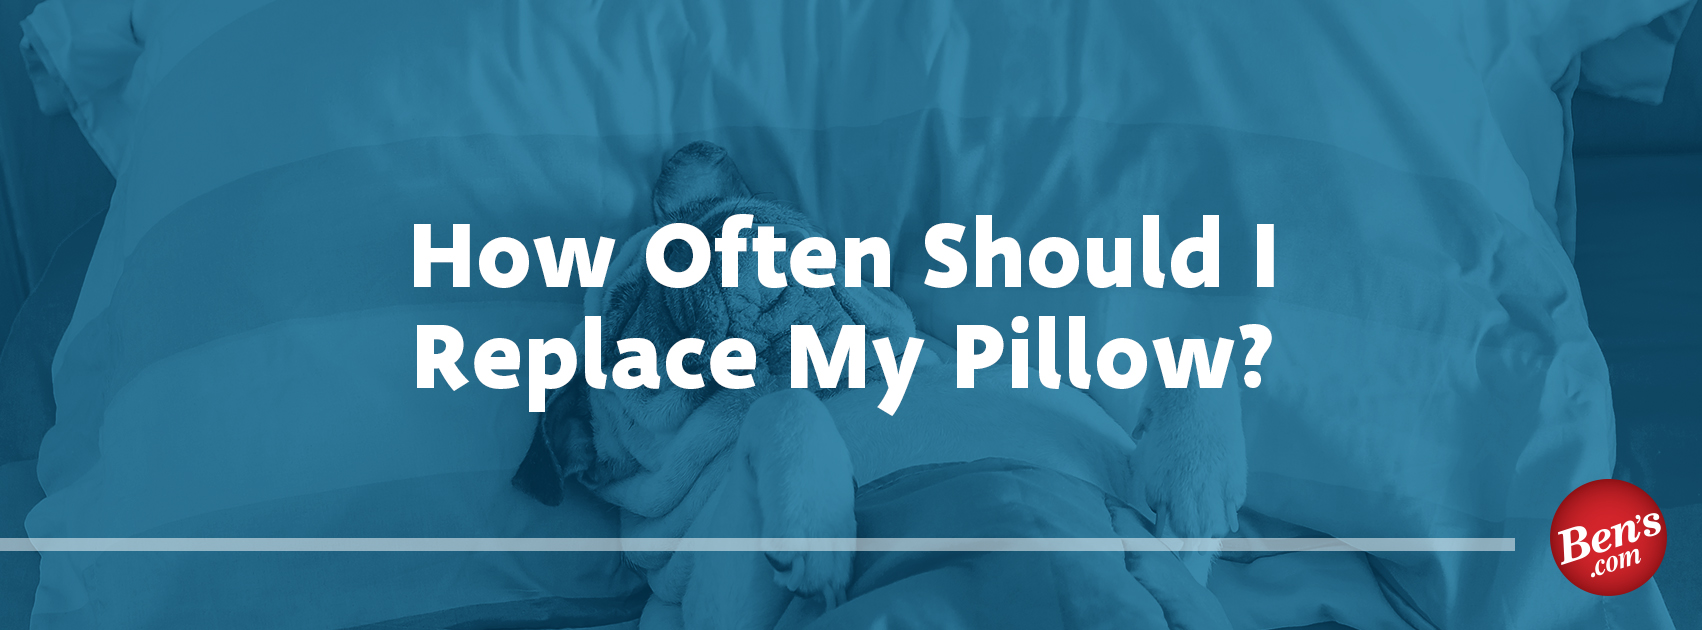 how often pillow